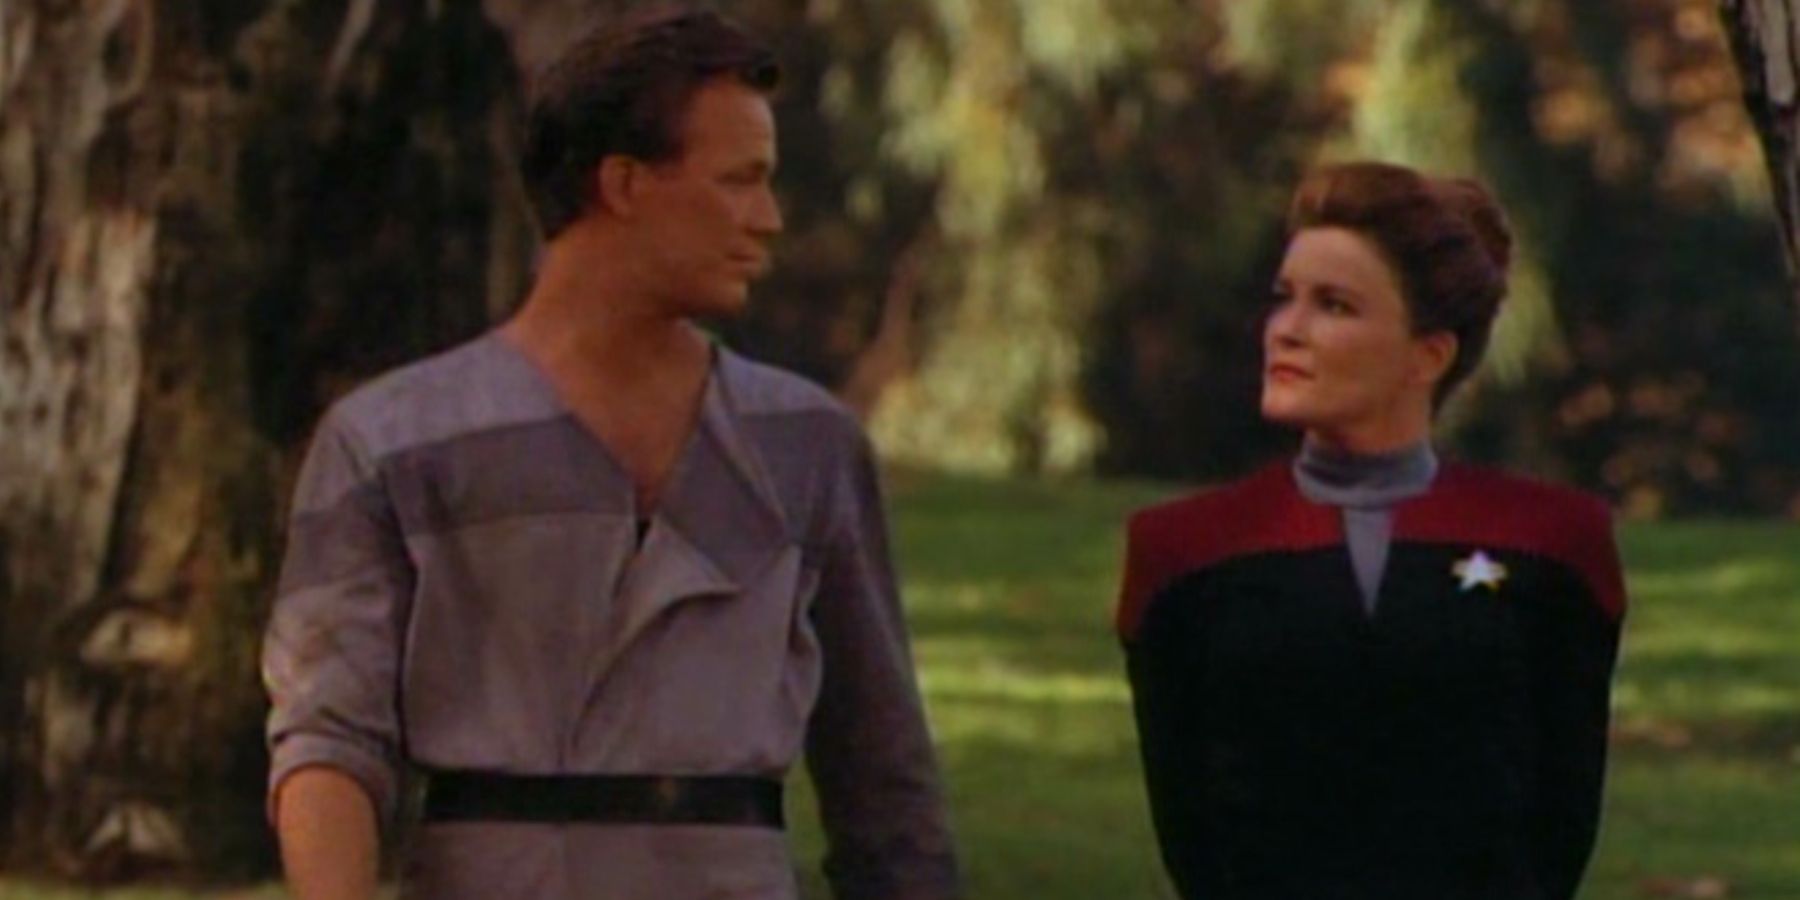 Captain Janeway recruits Tom Paris in Voyager season 1